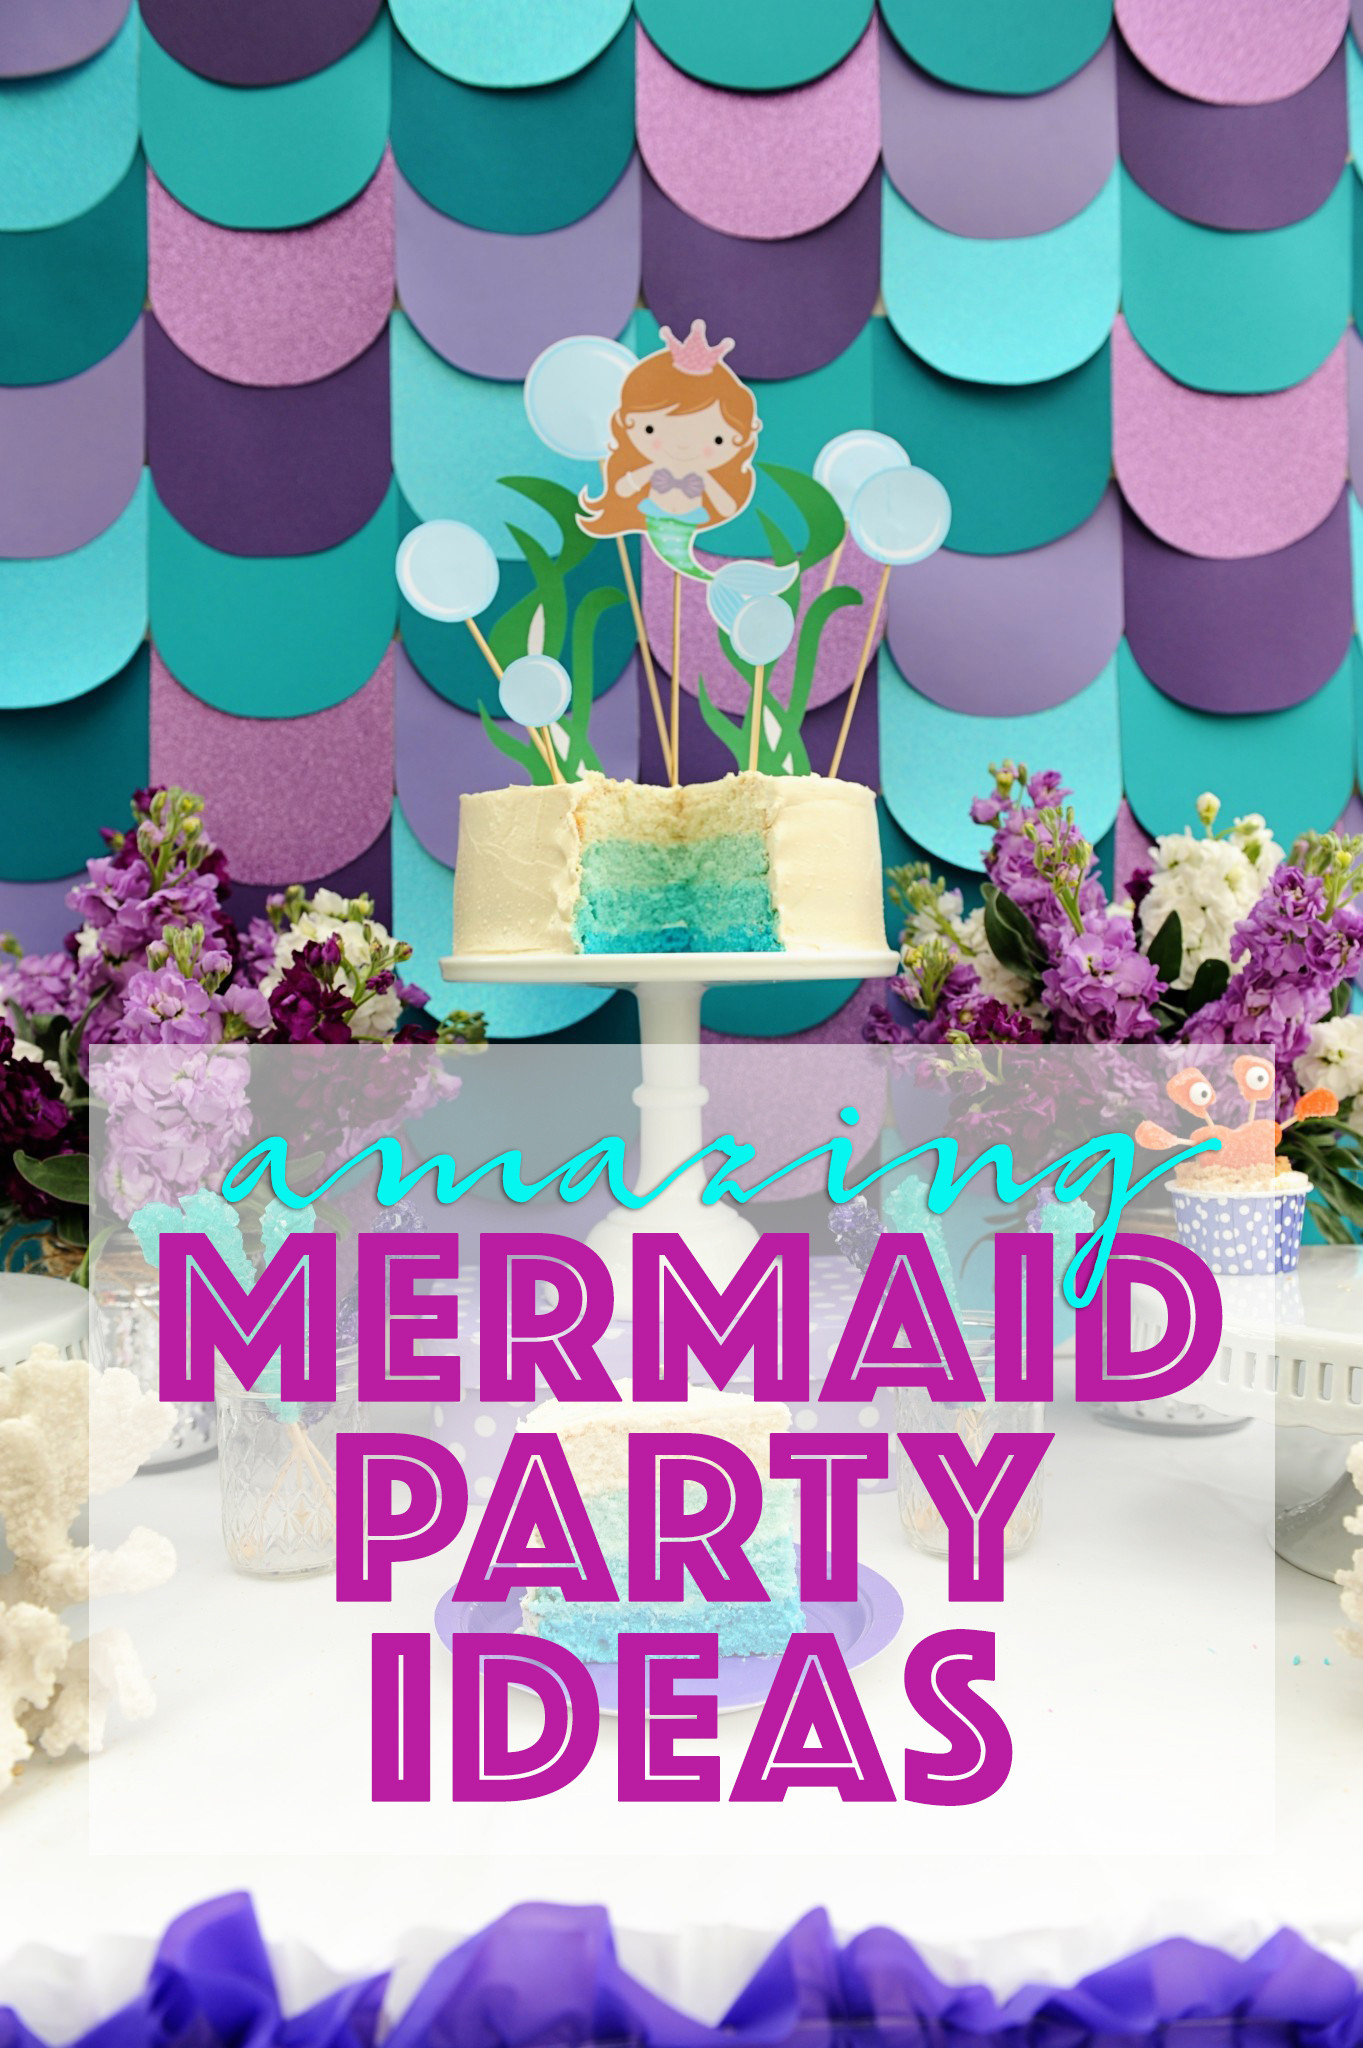 Mermaid Theme Party Ideas
 Mermaid Birthday Pool Party Ideas DIY